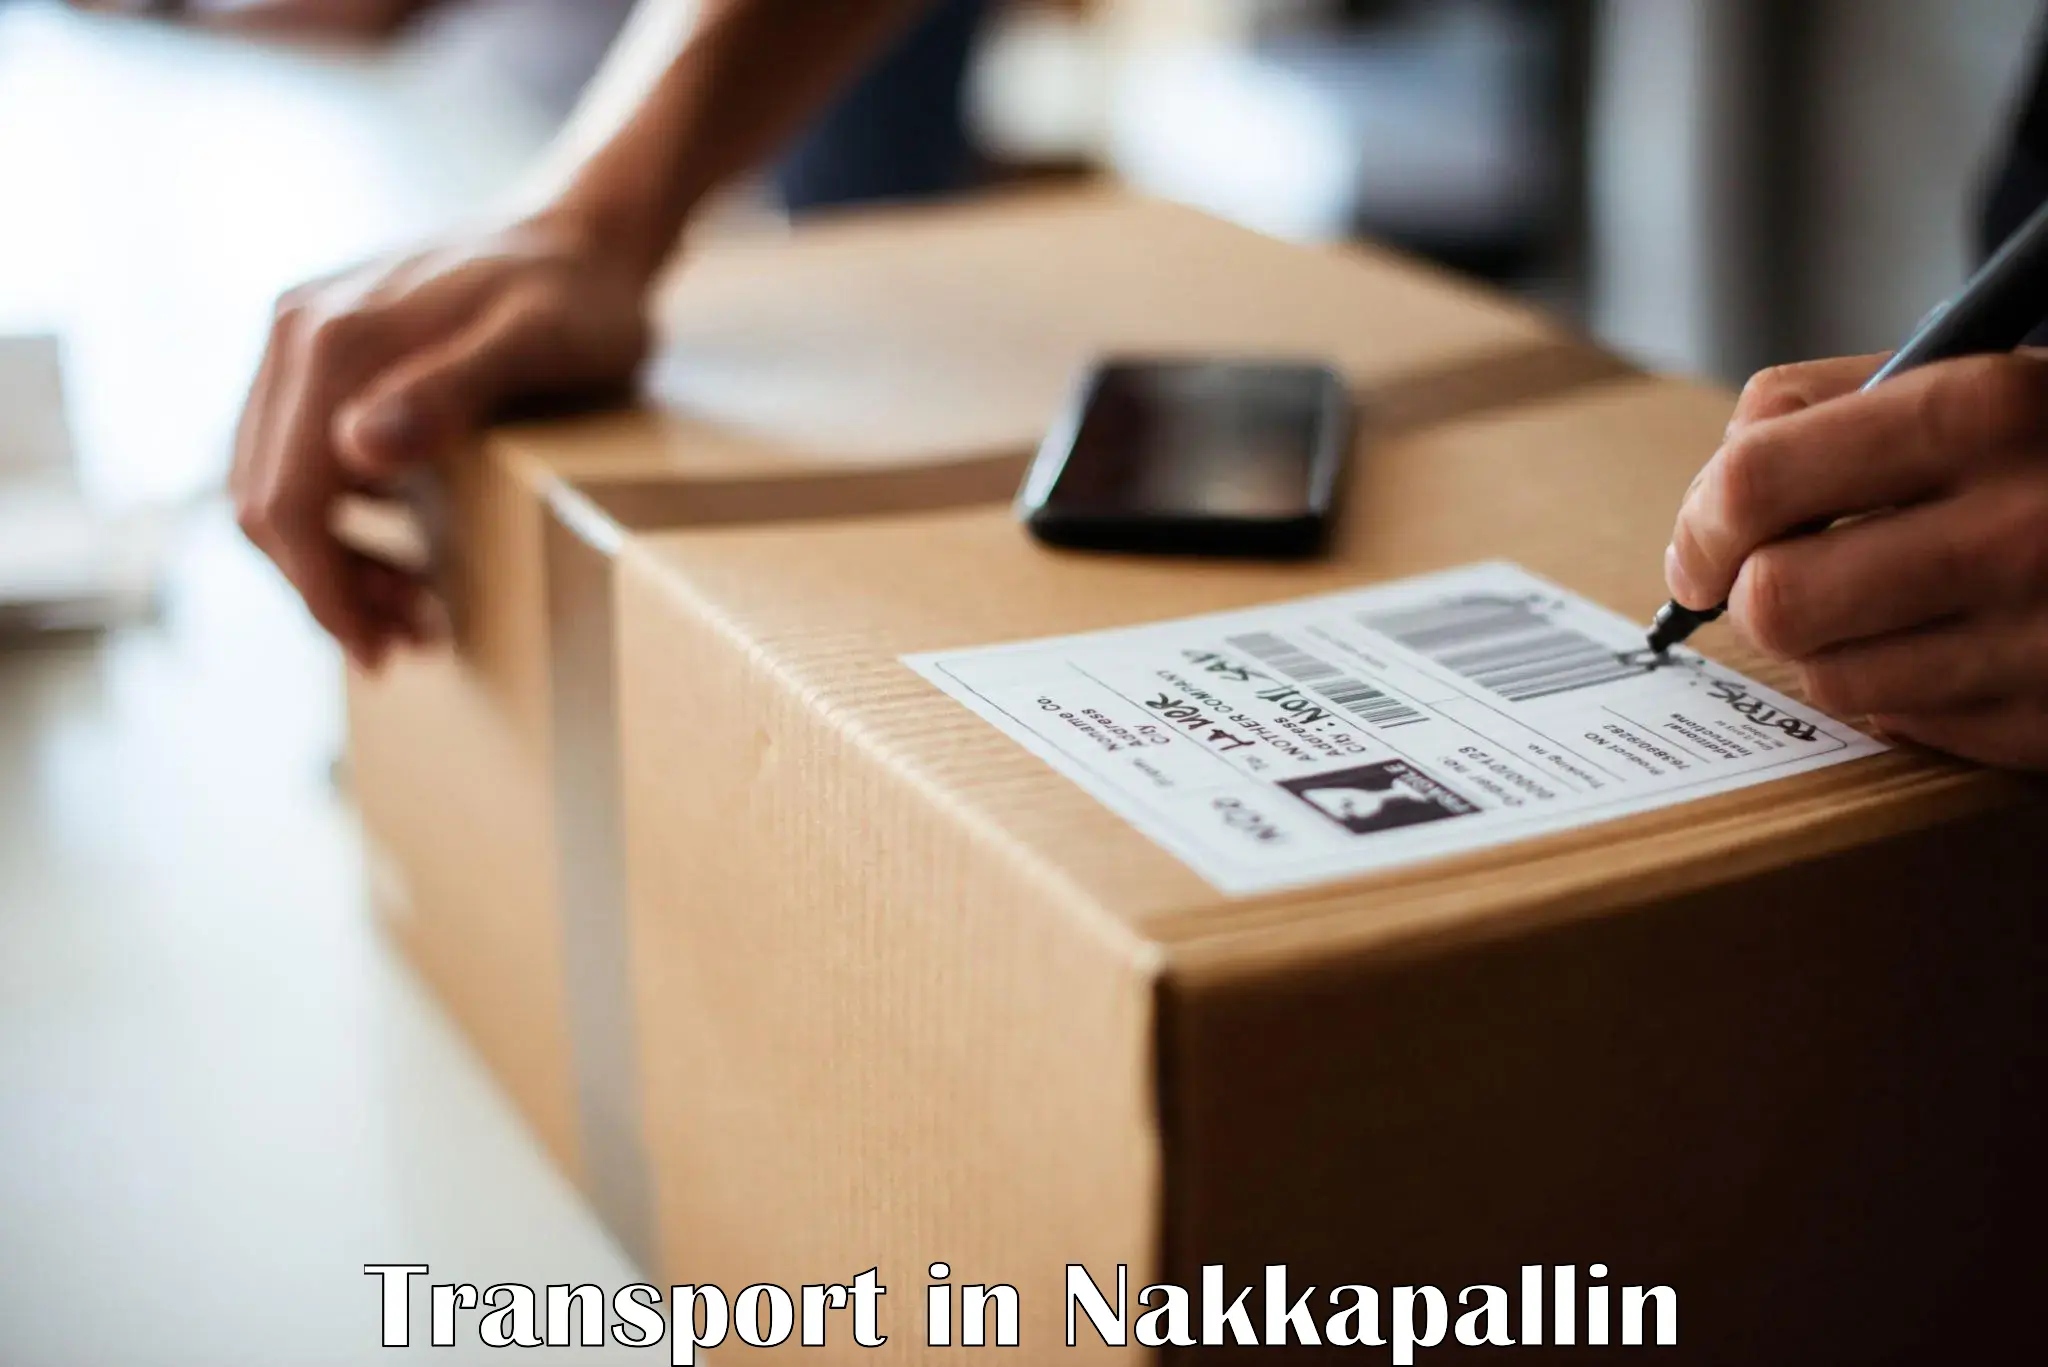 Online transport in Nakkapallin